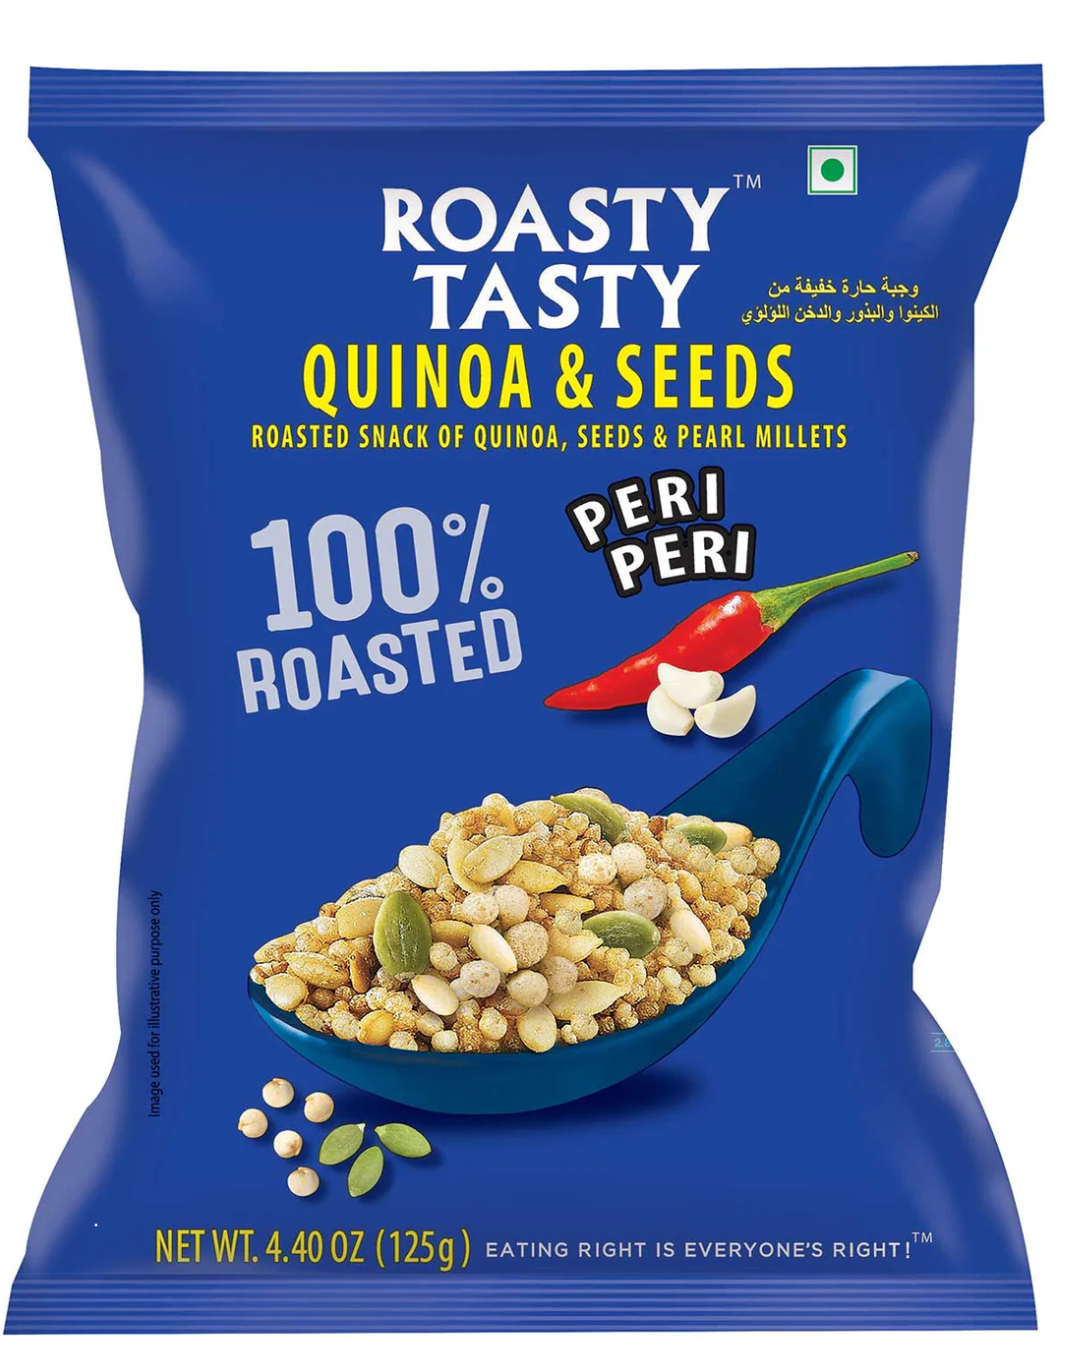 Roasty Tasty Quinoa & Seeds, Peri Peri, 300 g